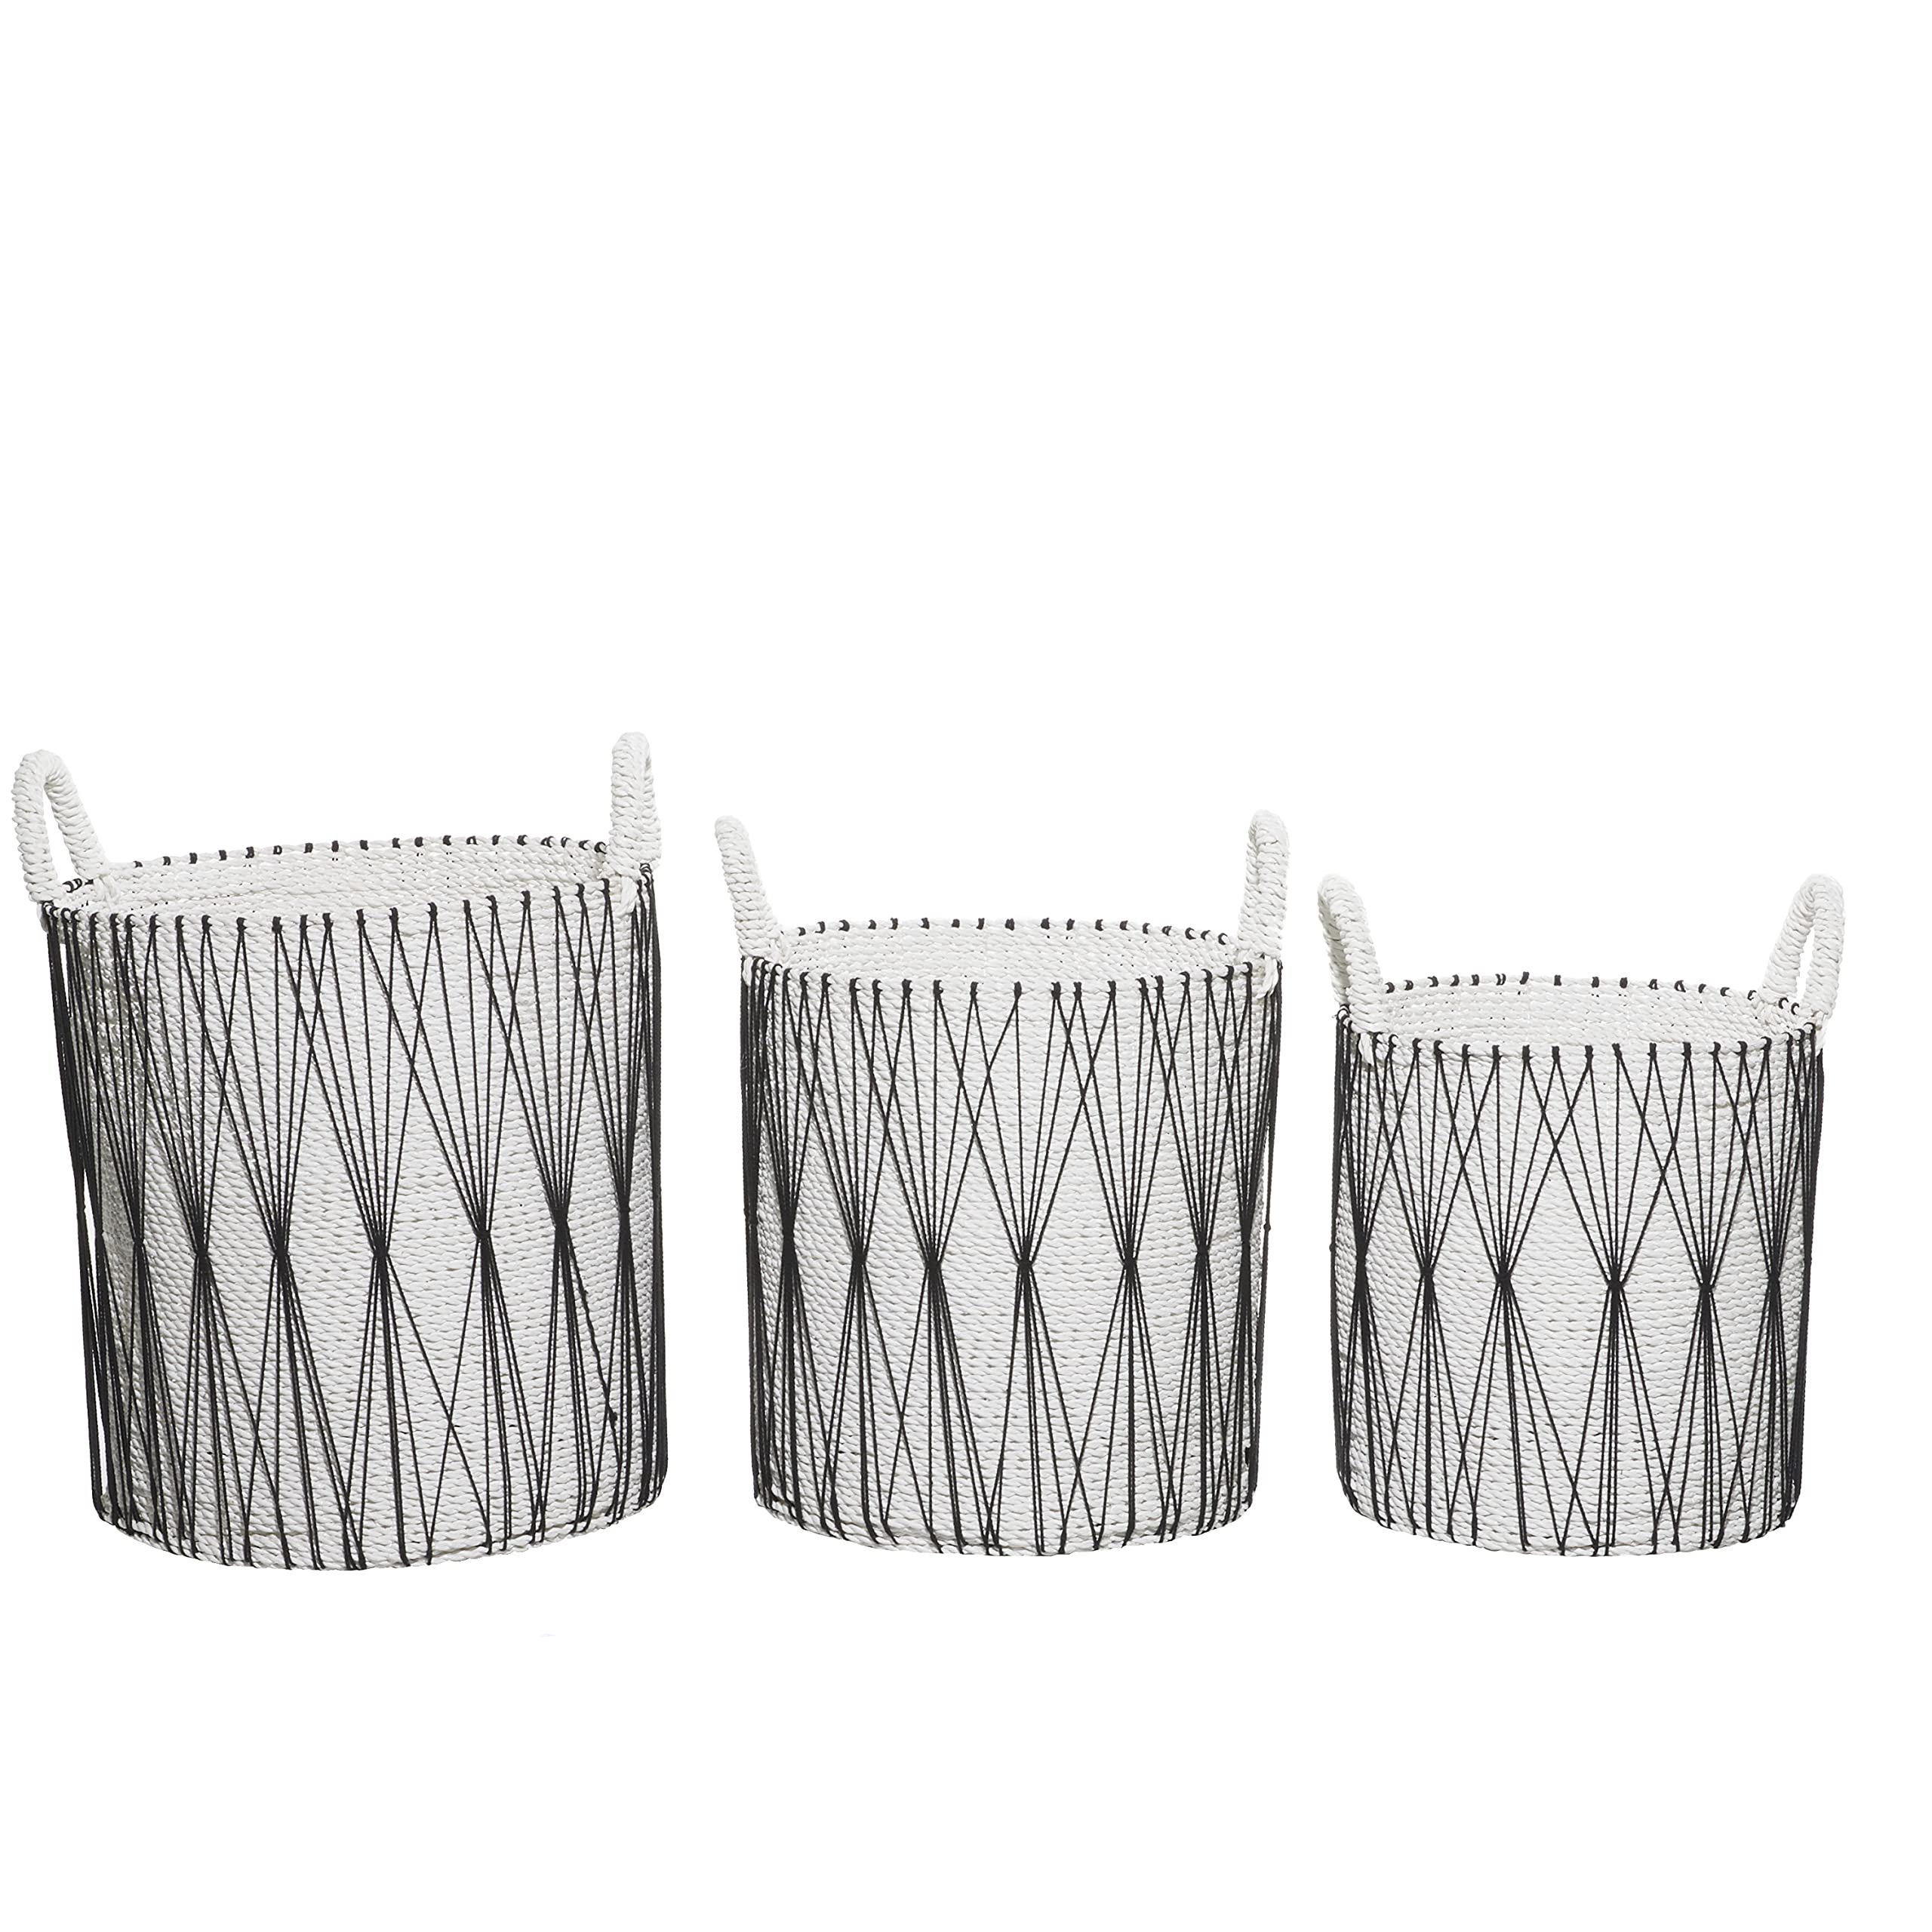 Deco 79 Plastic Handmade String Detail Storage Basket with Handles, Set of 3 21", 21", 19"H, White